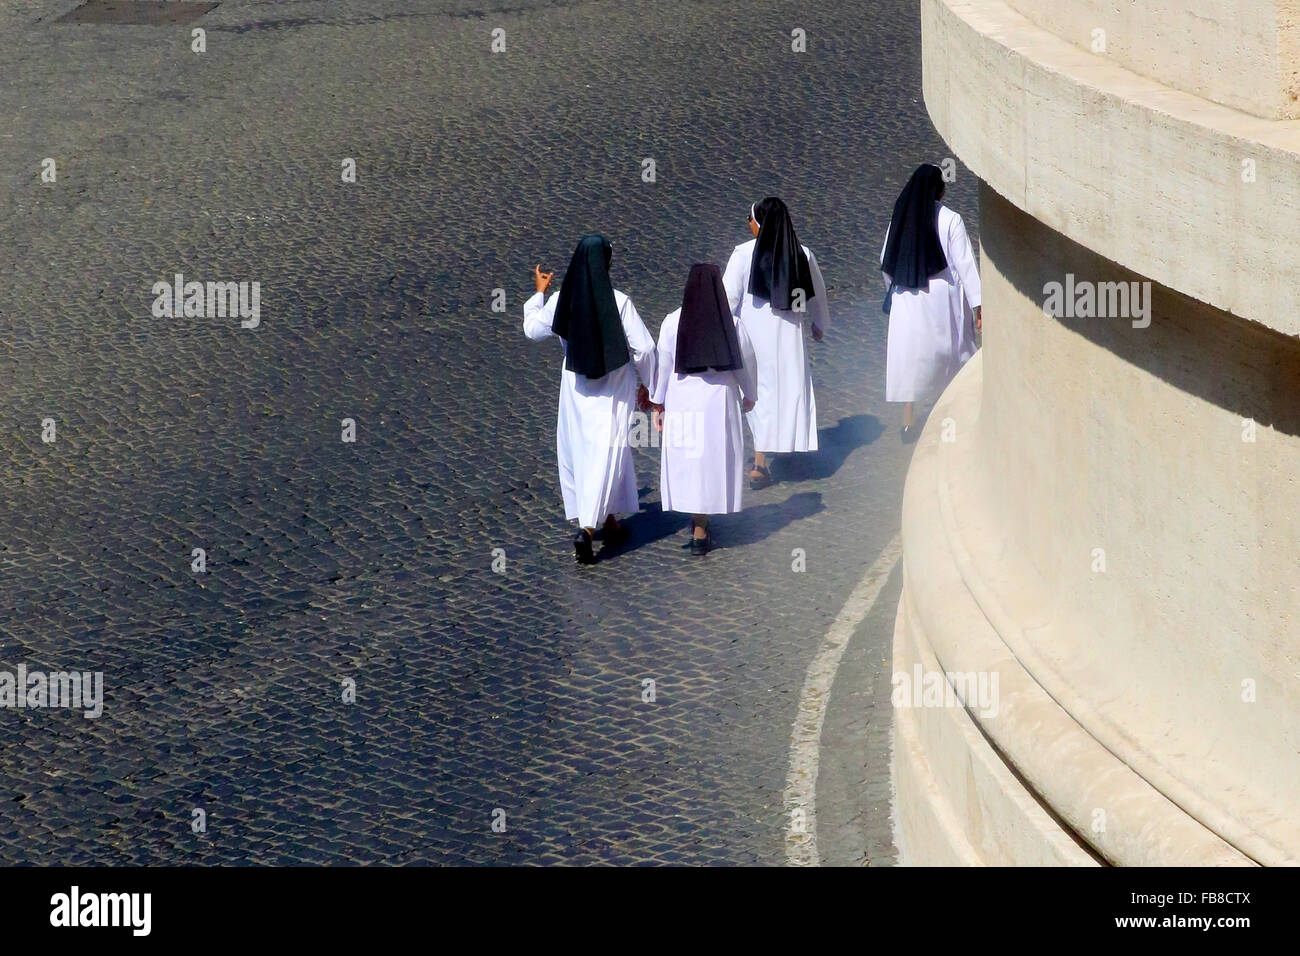 Four nuns walking in Vatican City Stock Photo